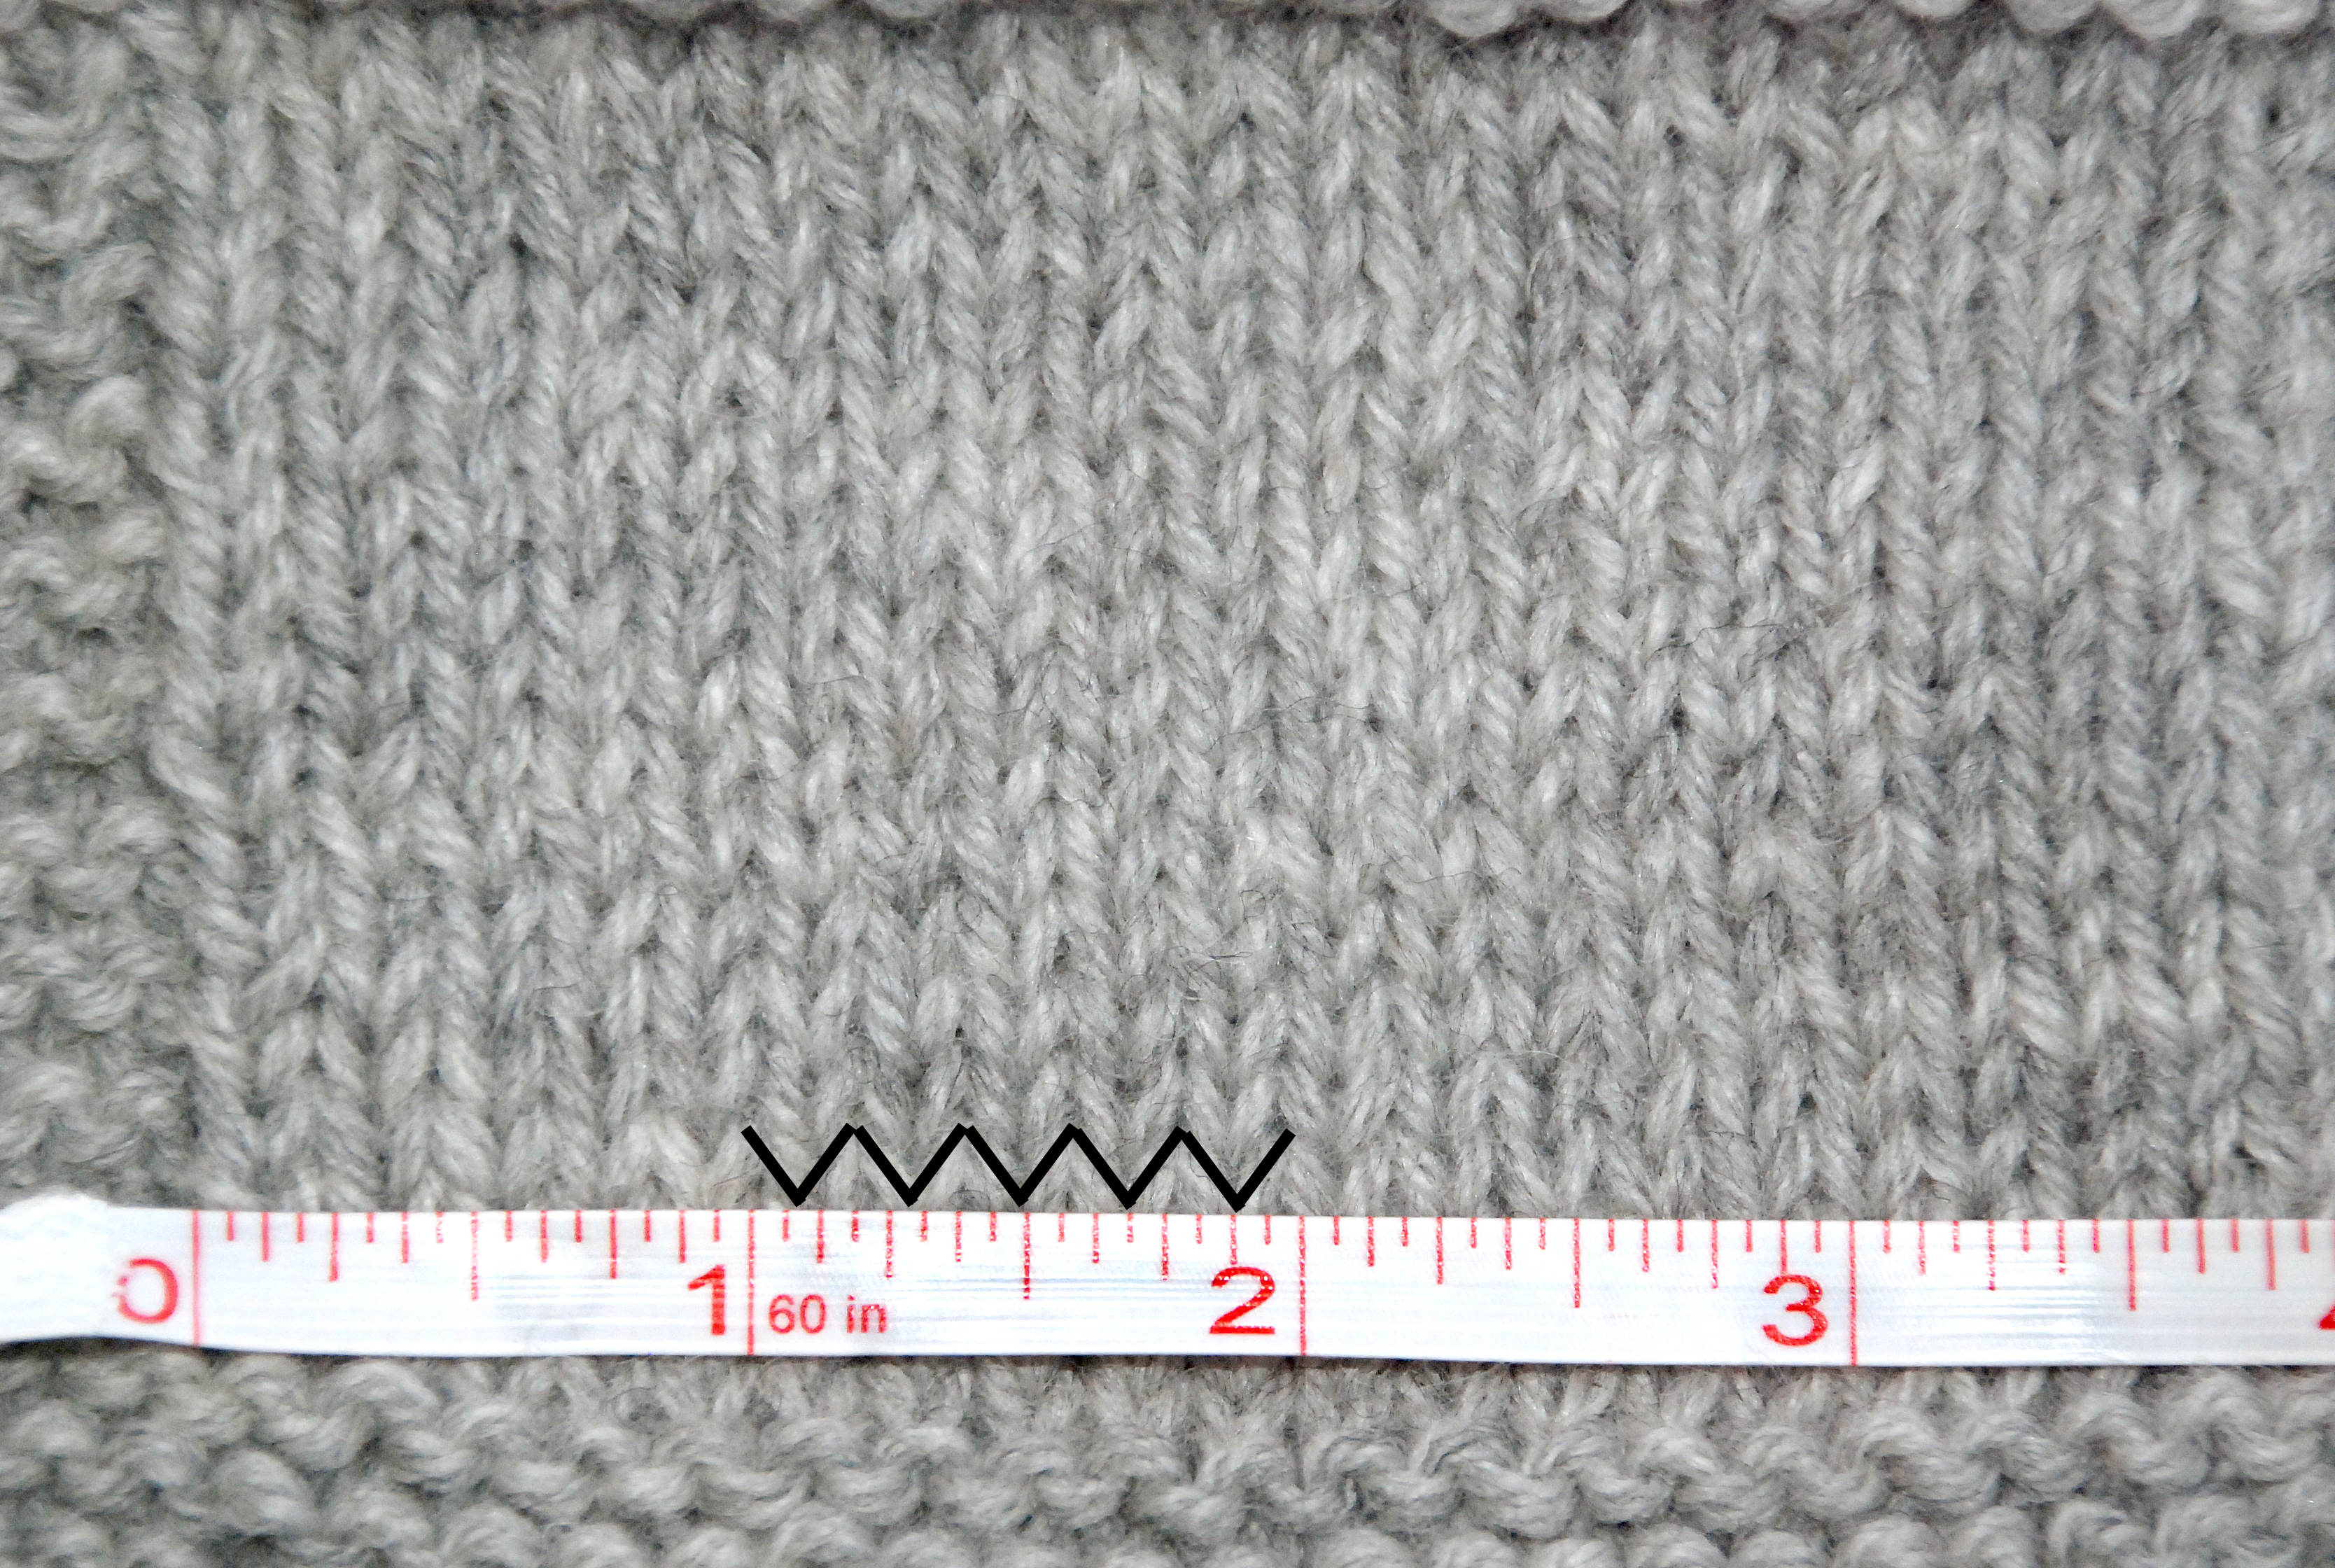 An Experiment in Gauge - KnitPicks Staff Knitting Blog